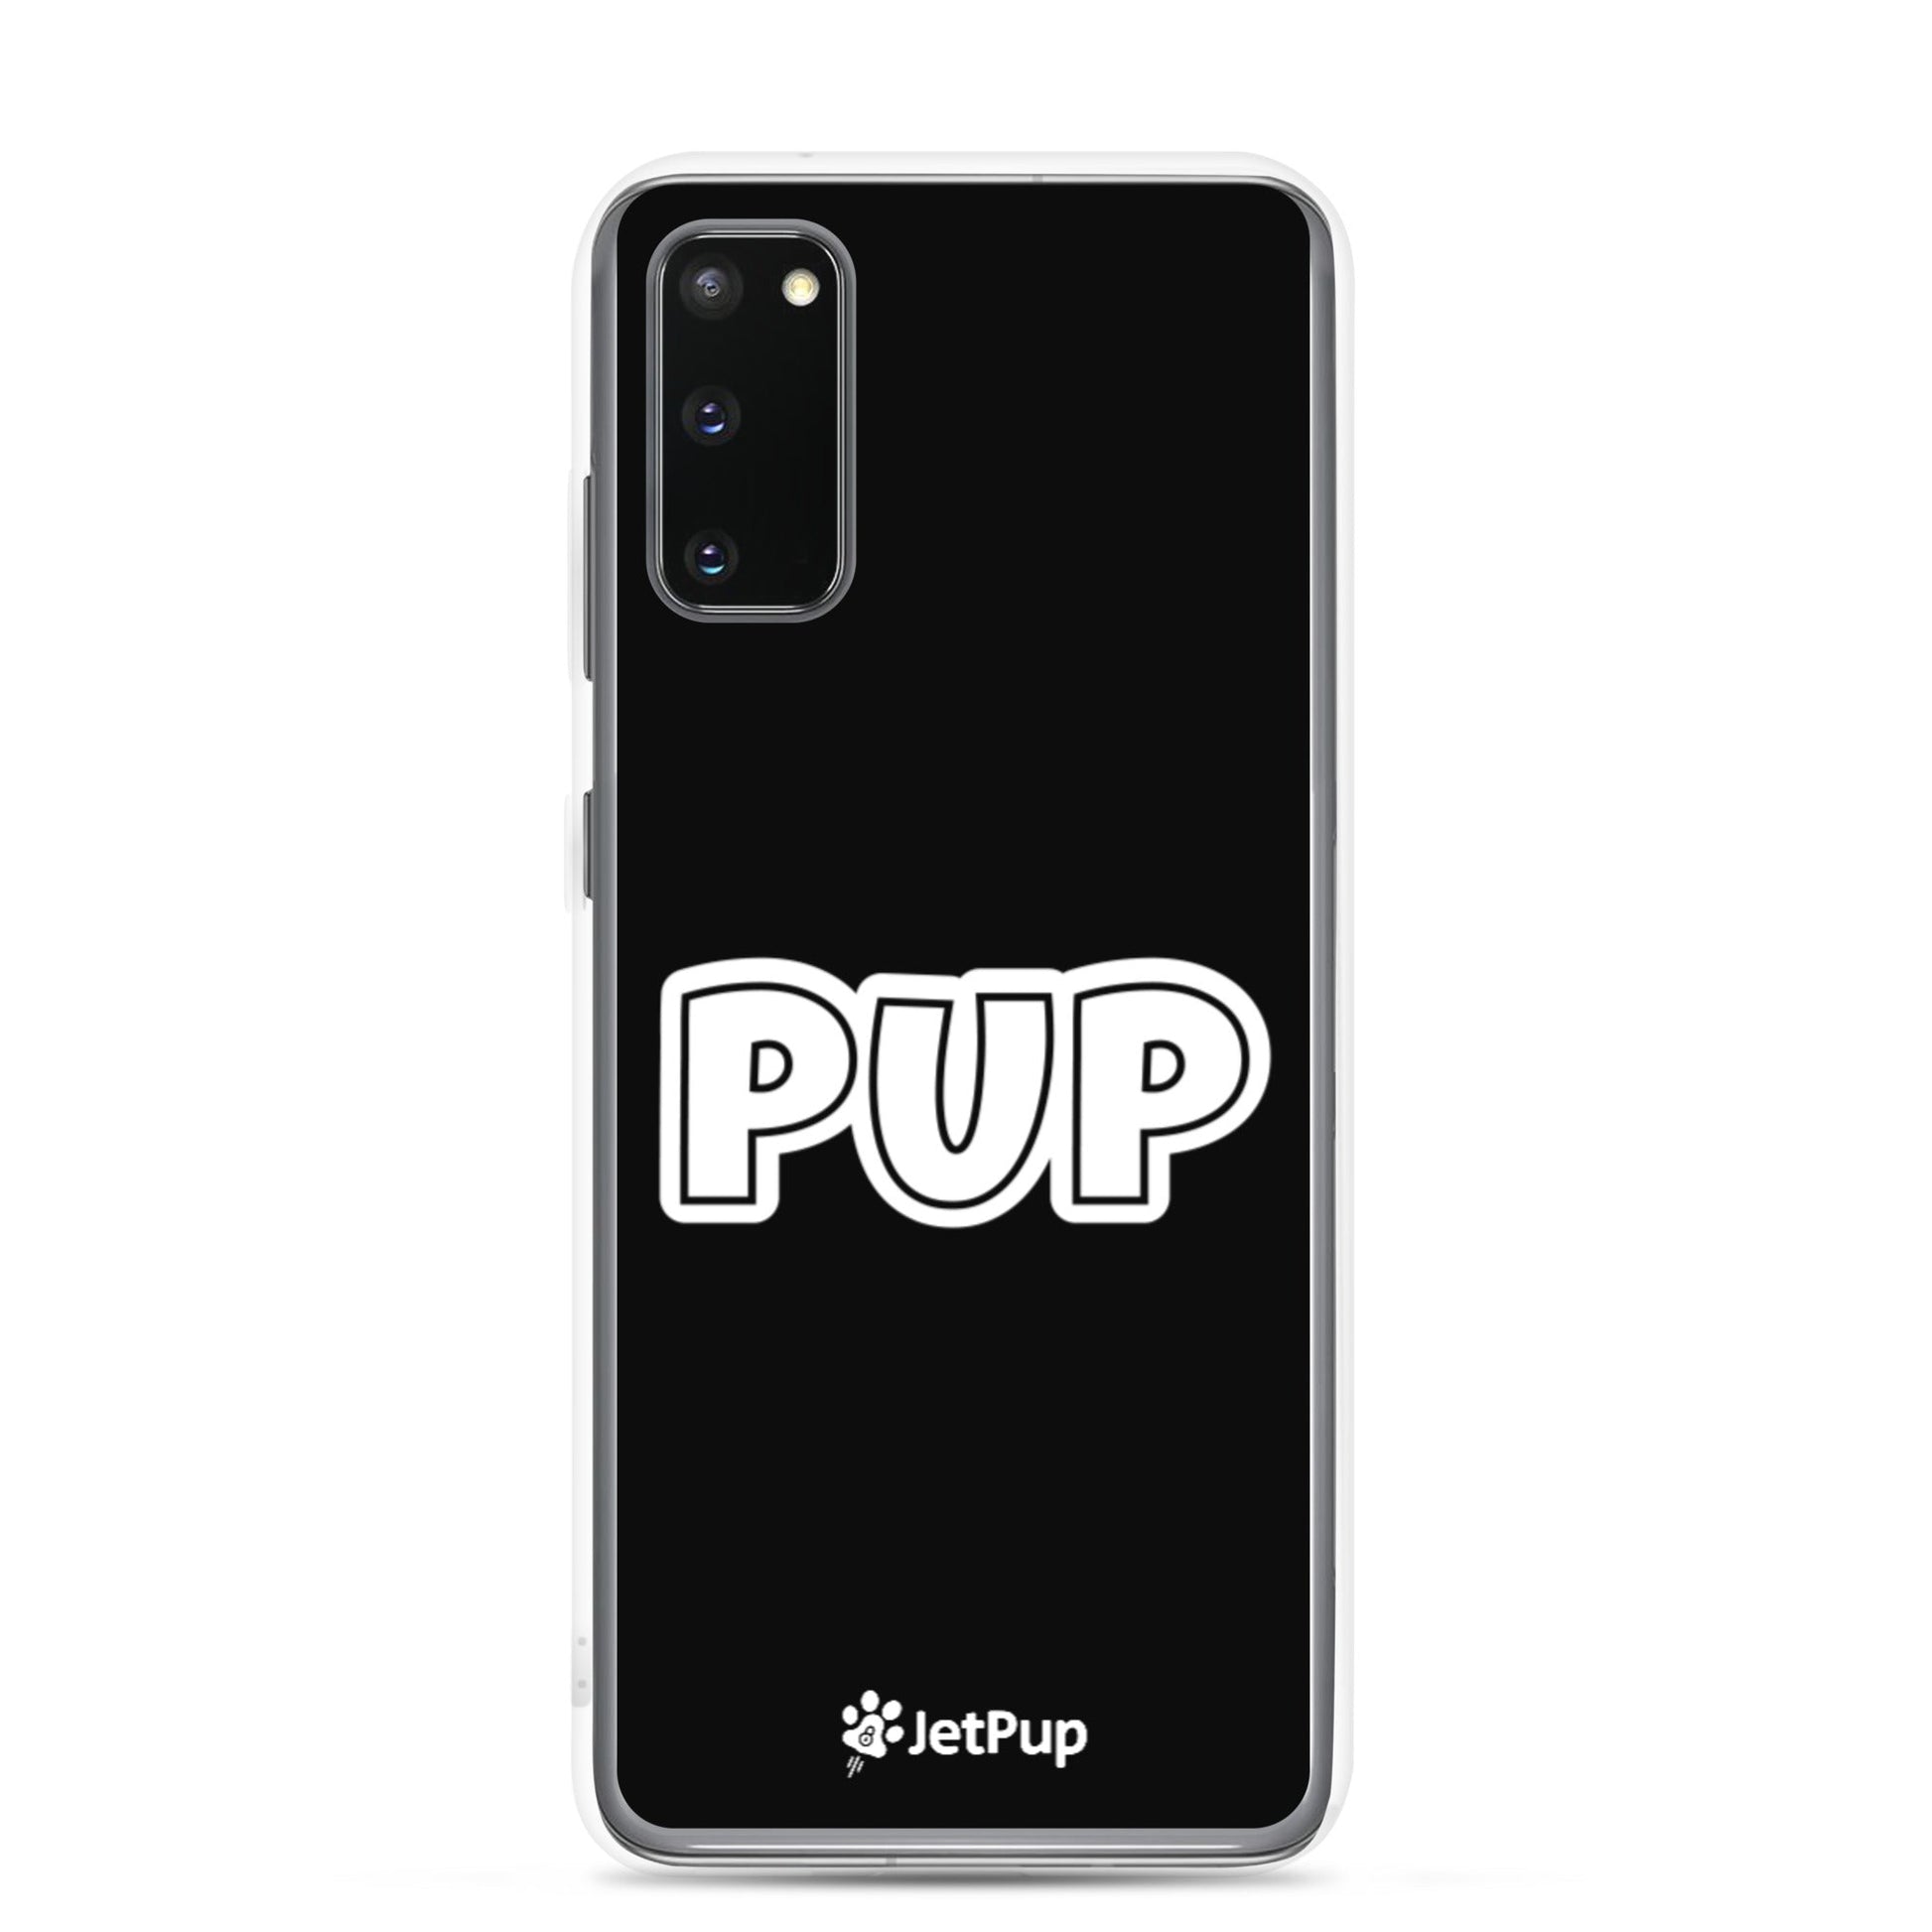 Pup Samsung Case - Black - JetPup